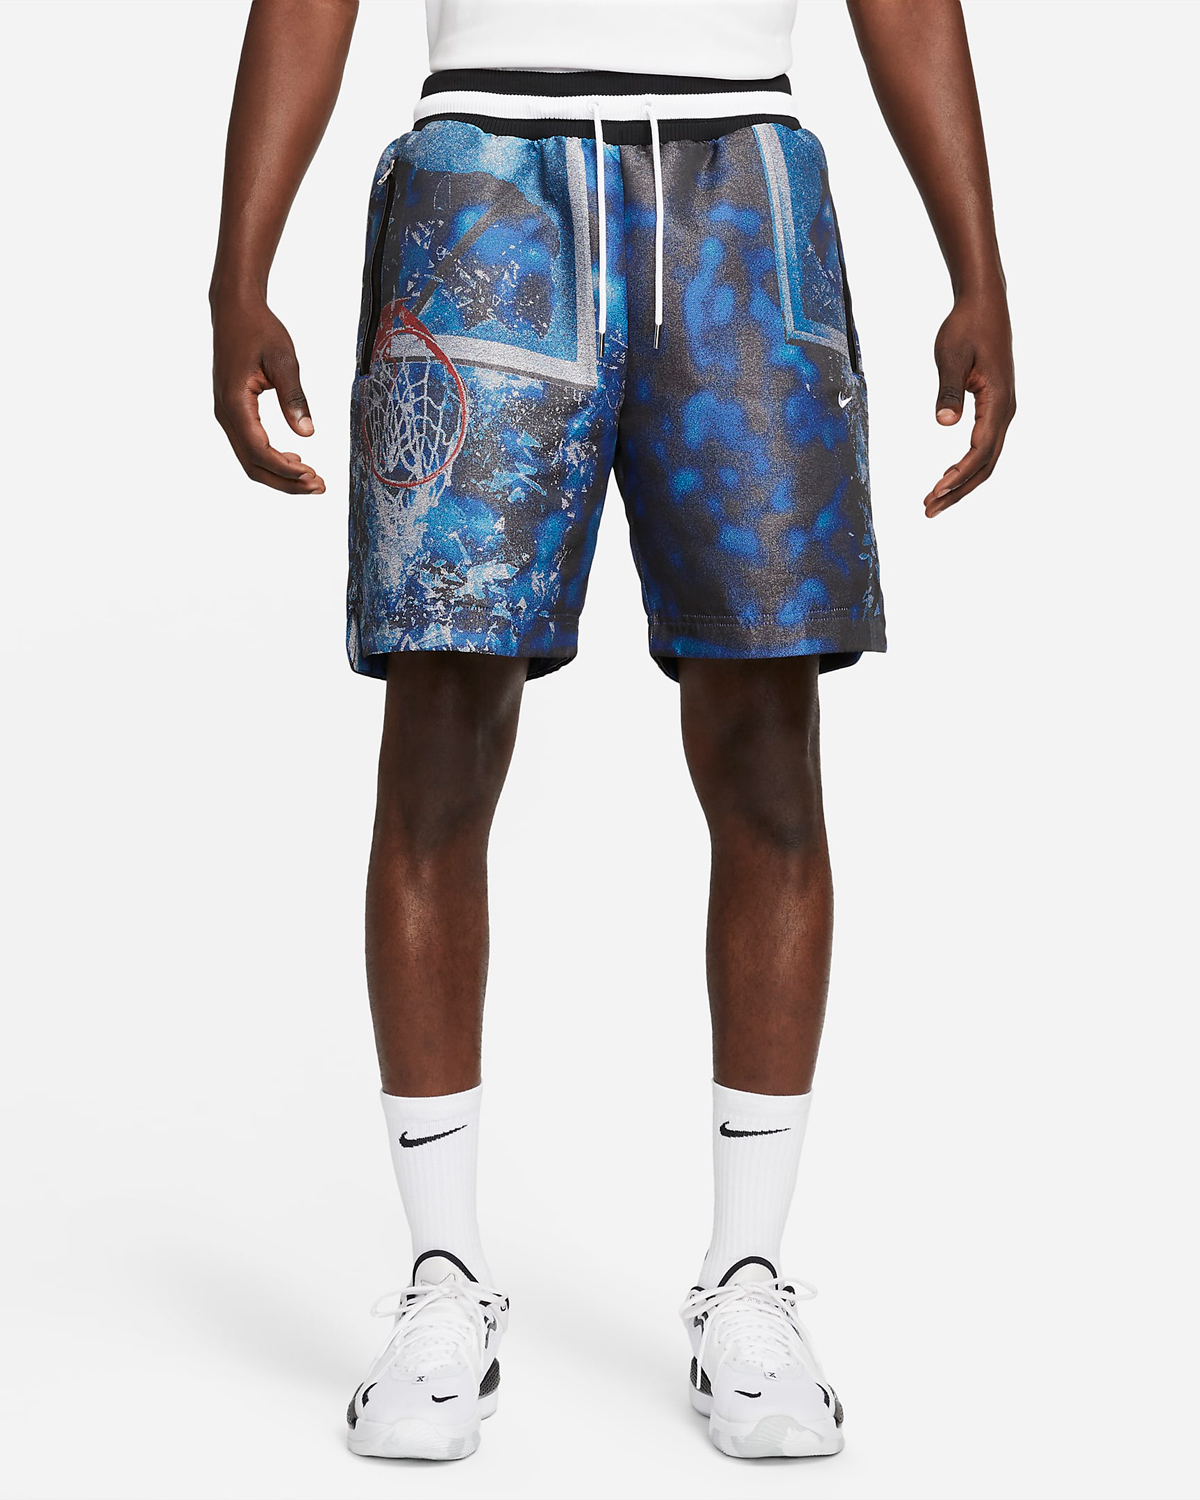 Nike-DNA-Basketball-Shorts-Game-Royal-1